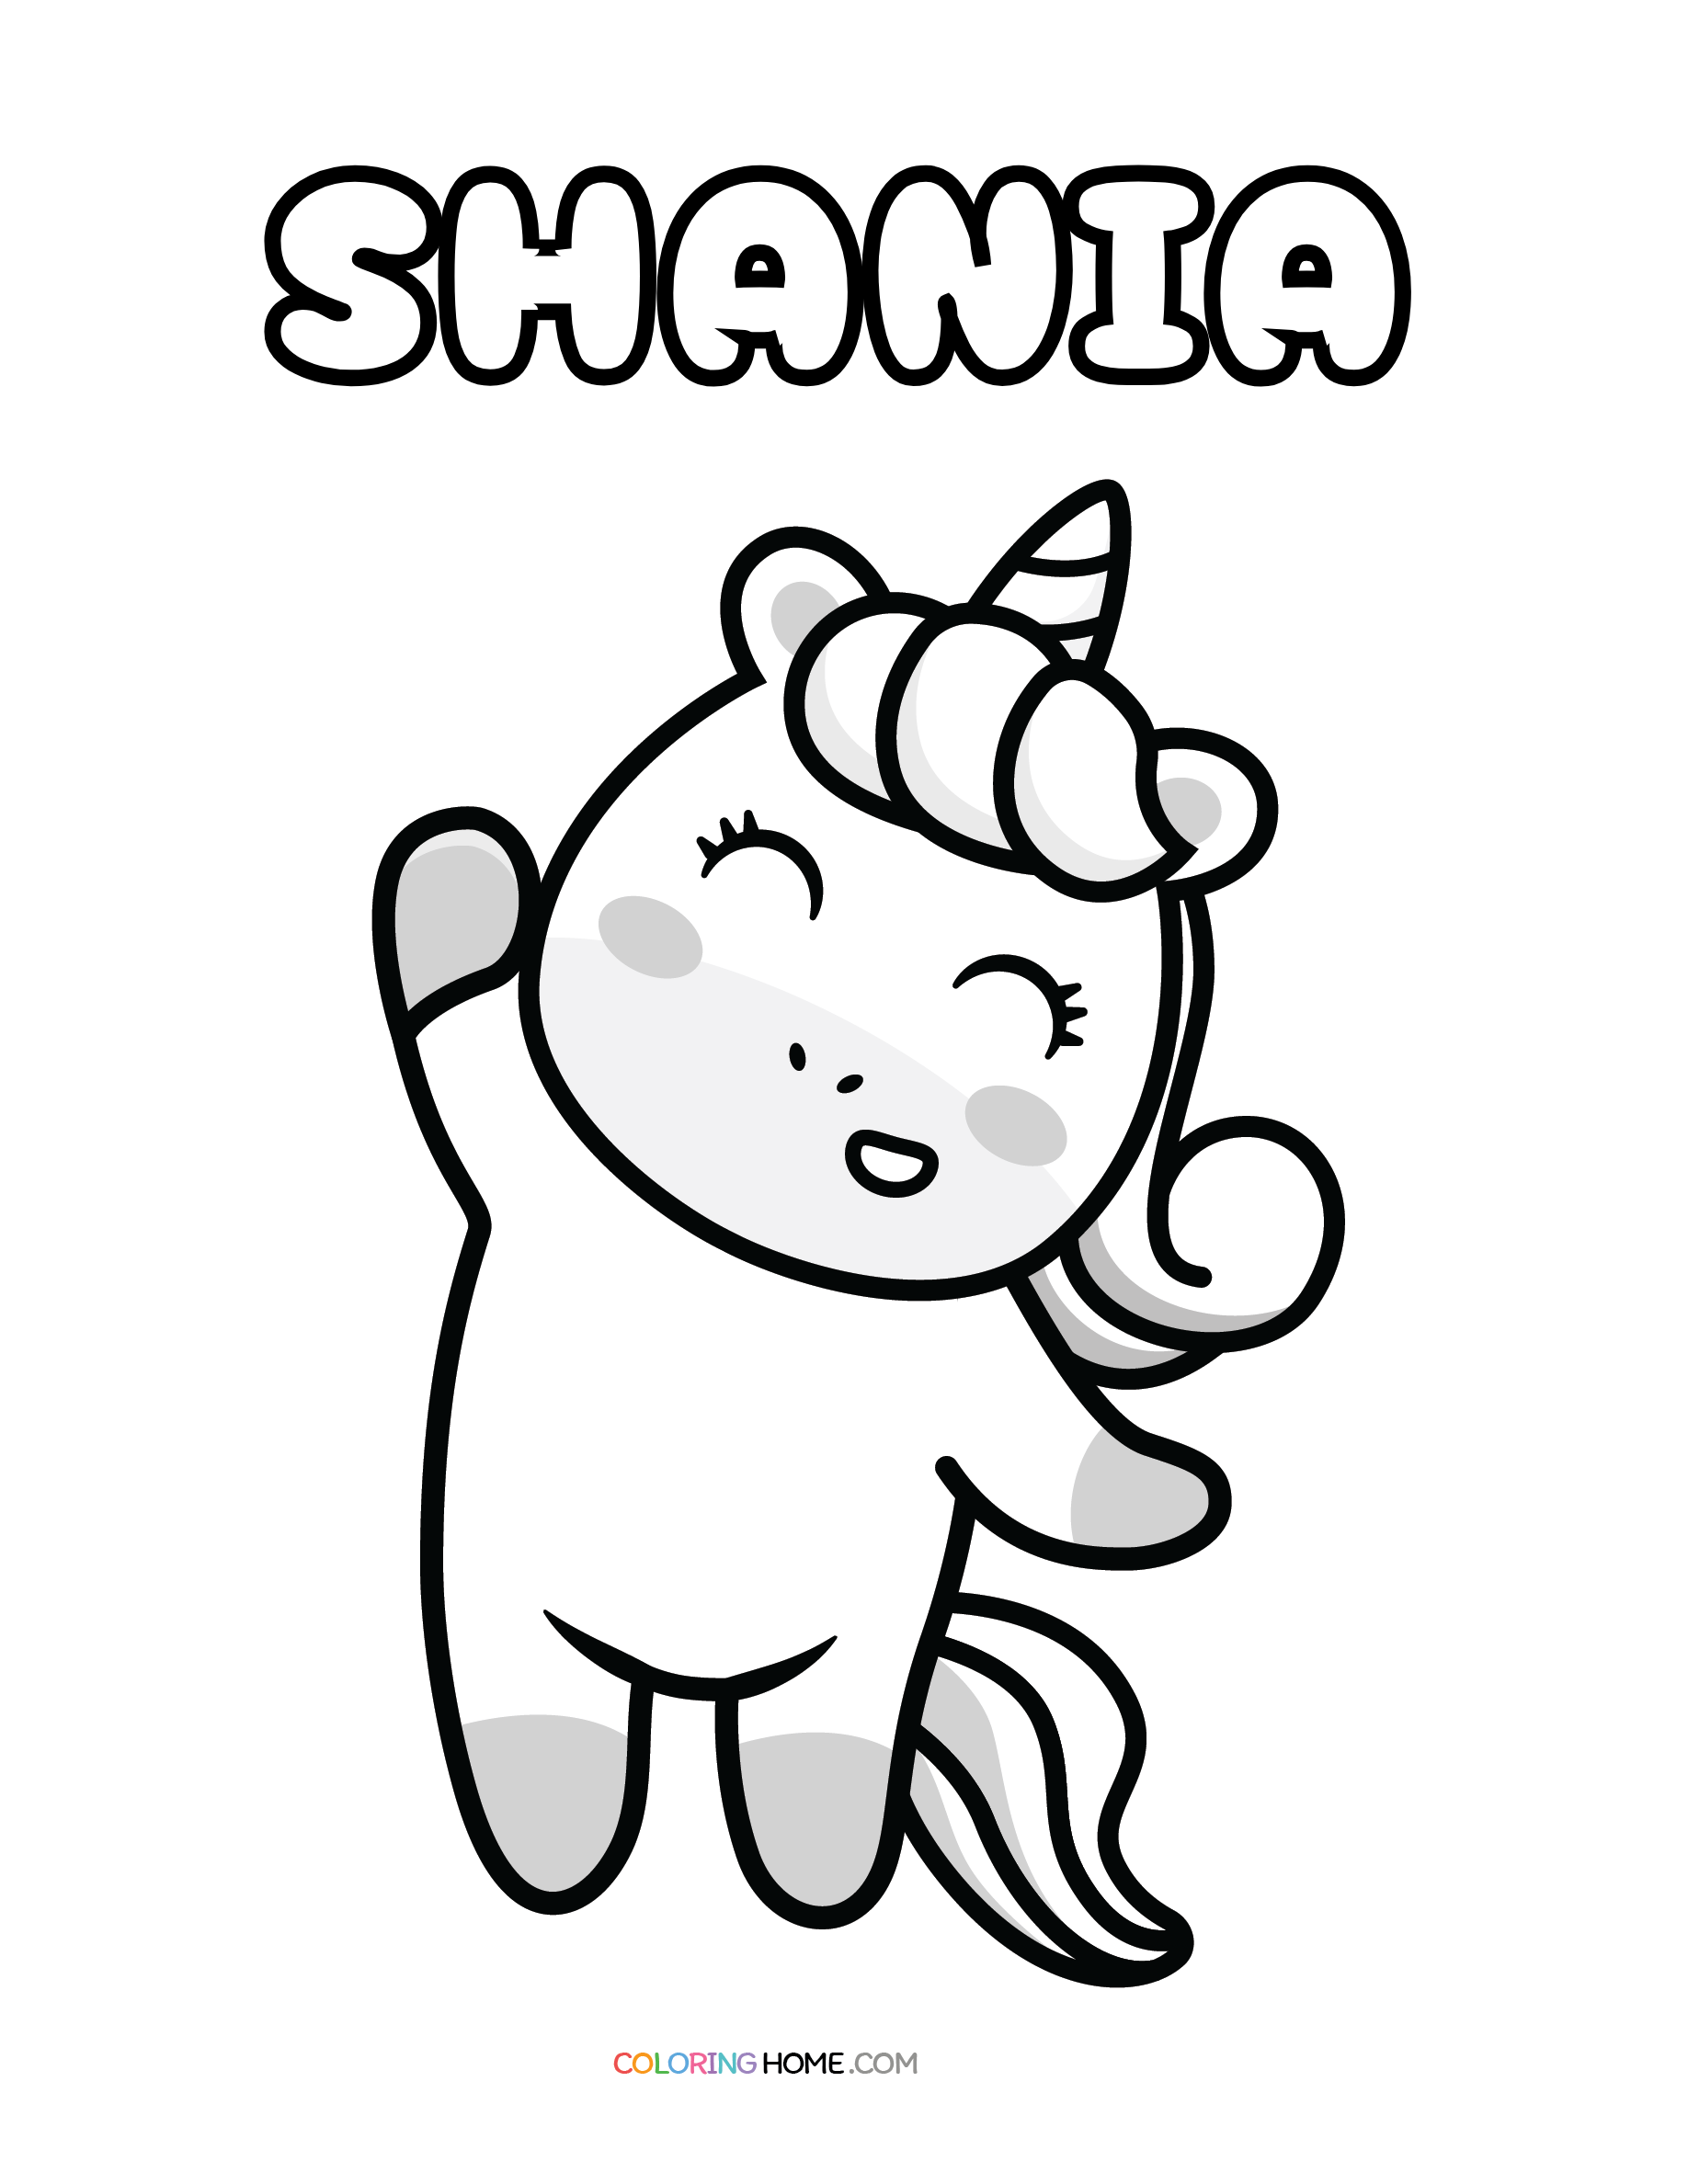 Shania unicorn coloring page